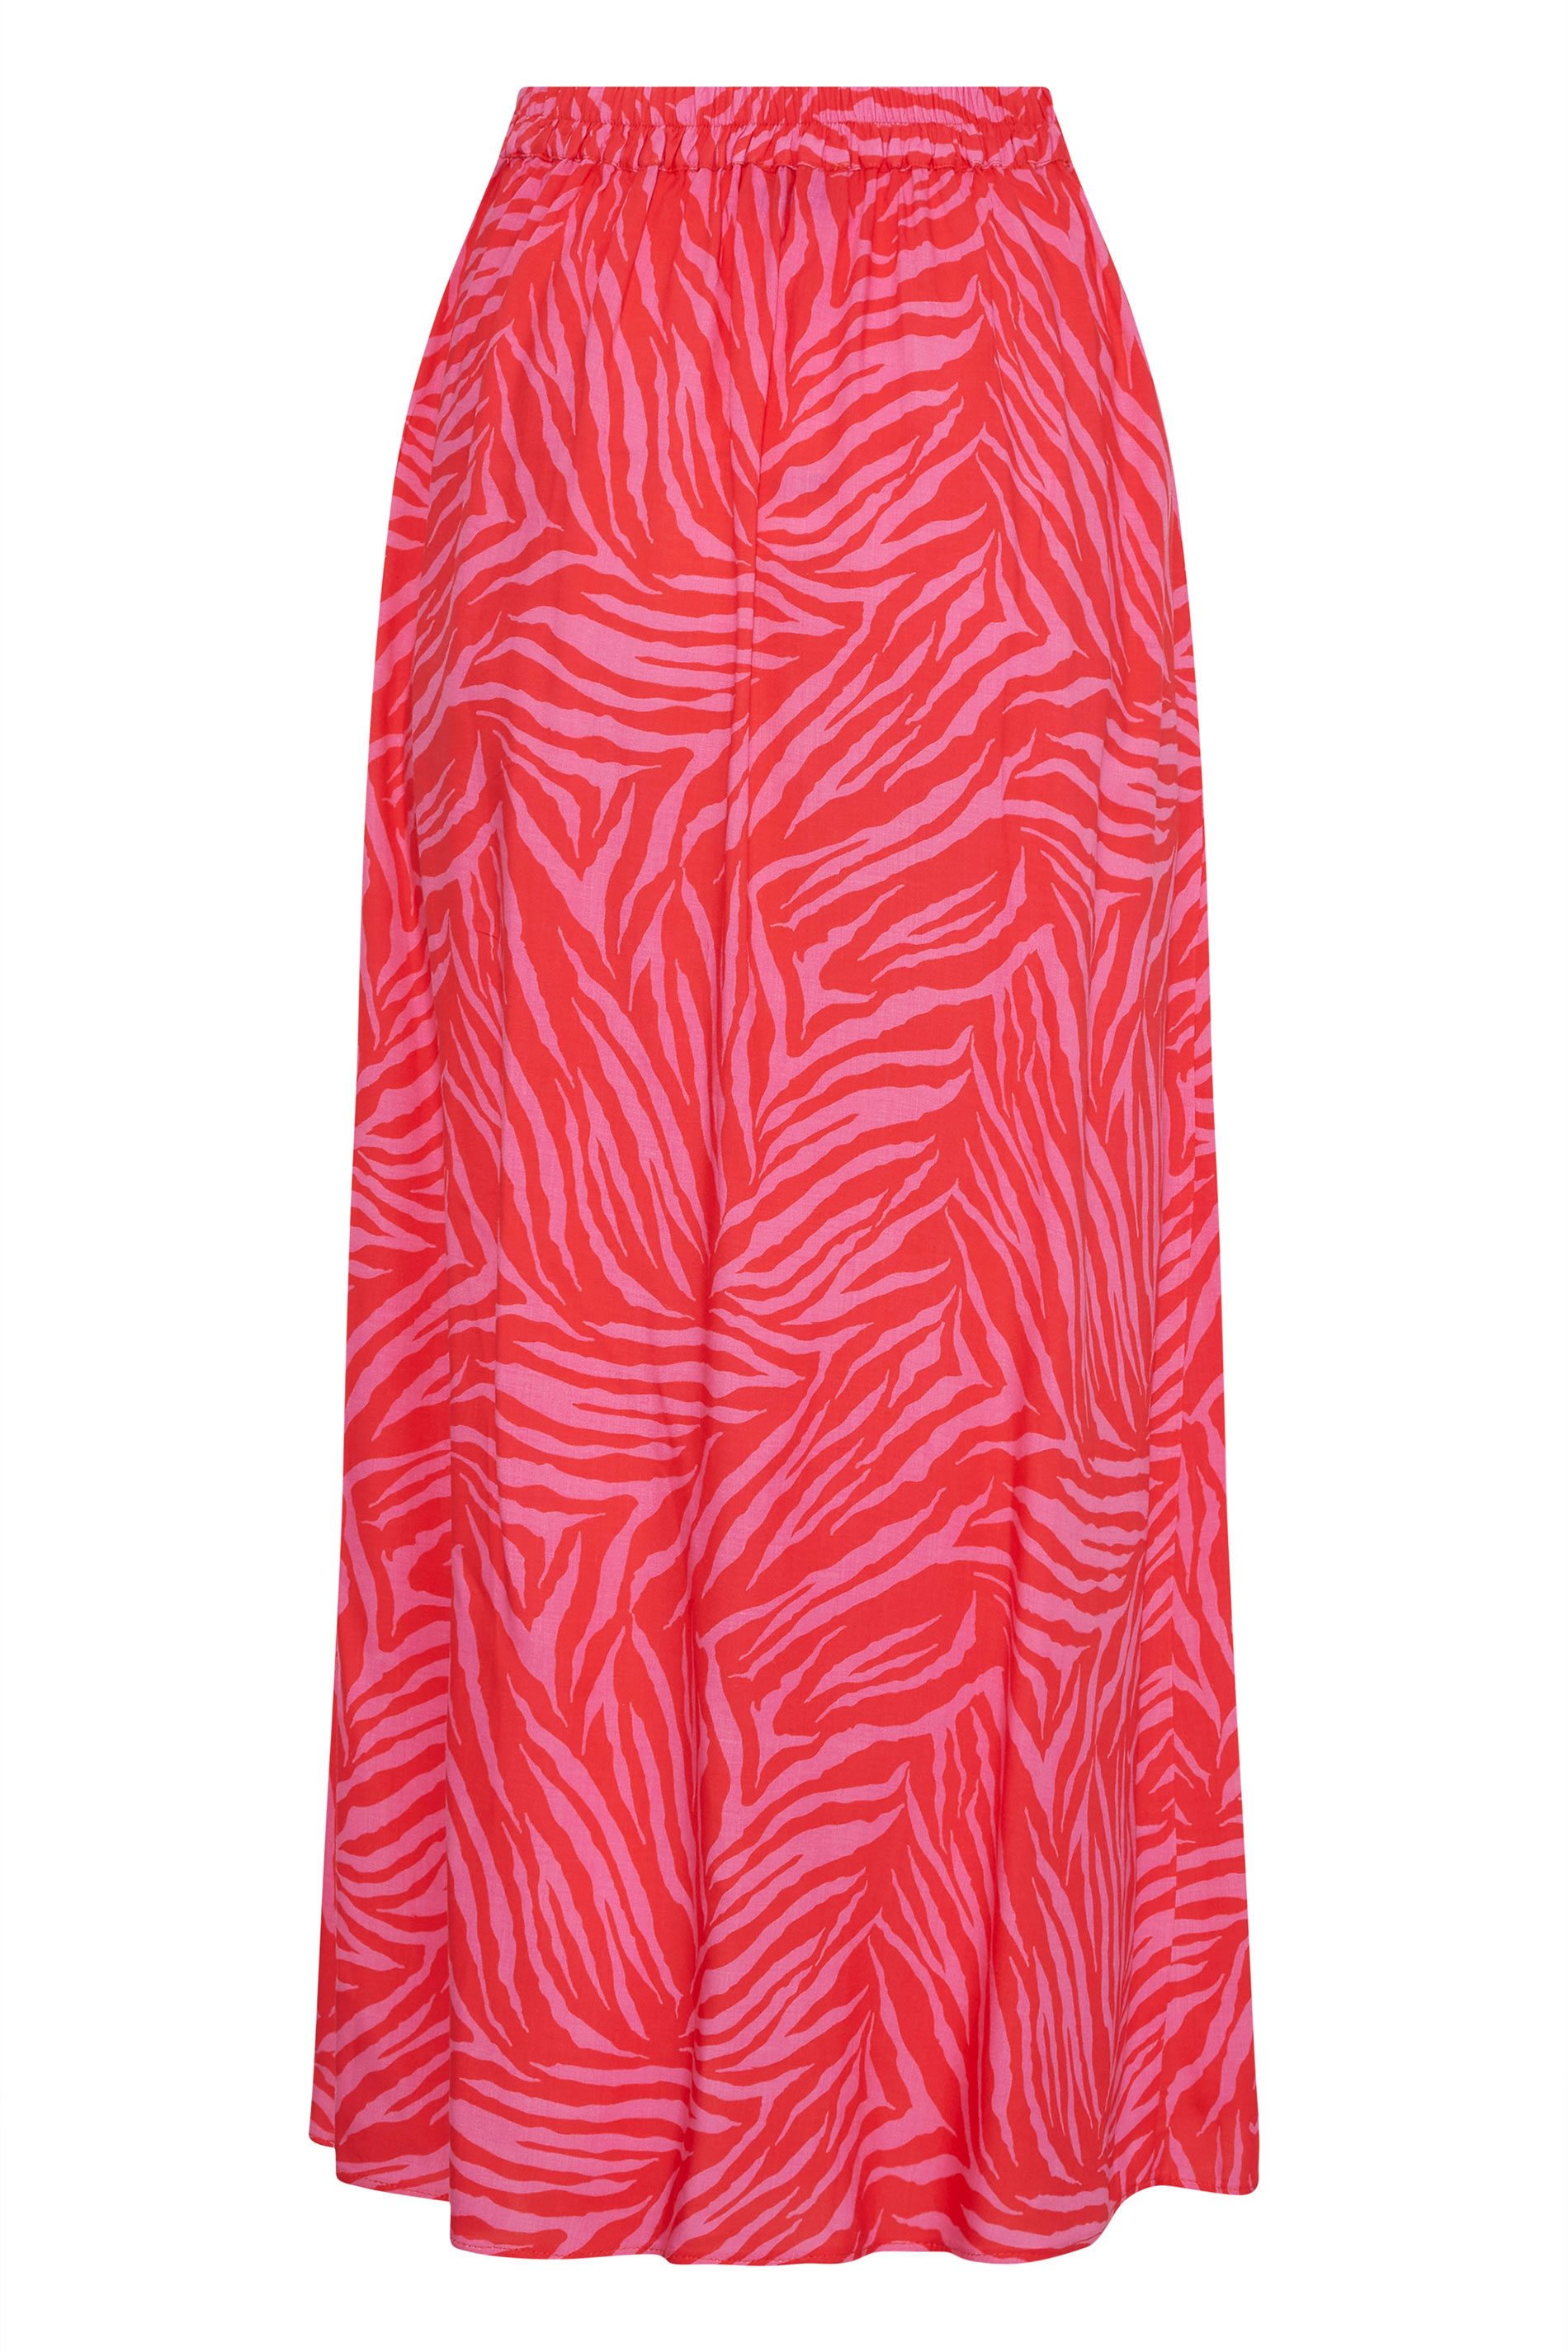 Tall Women's LTS Pink Zebra Print Midi Skirt | Long Tall Sally